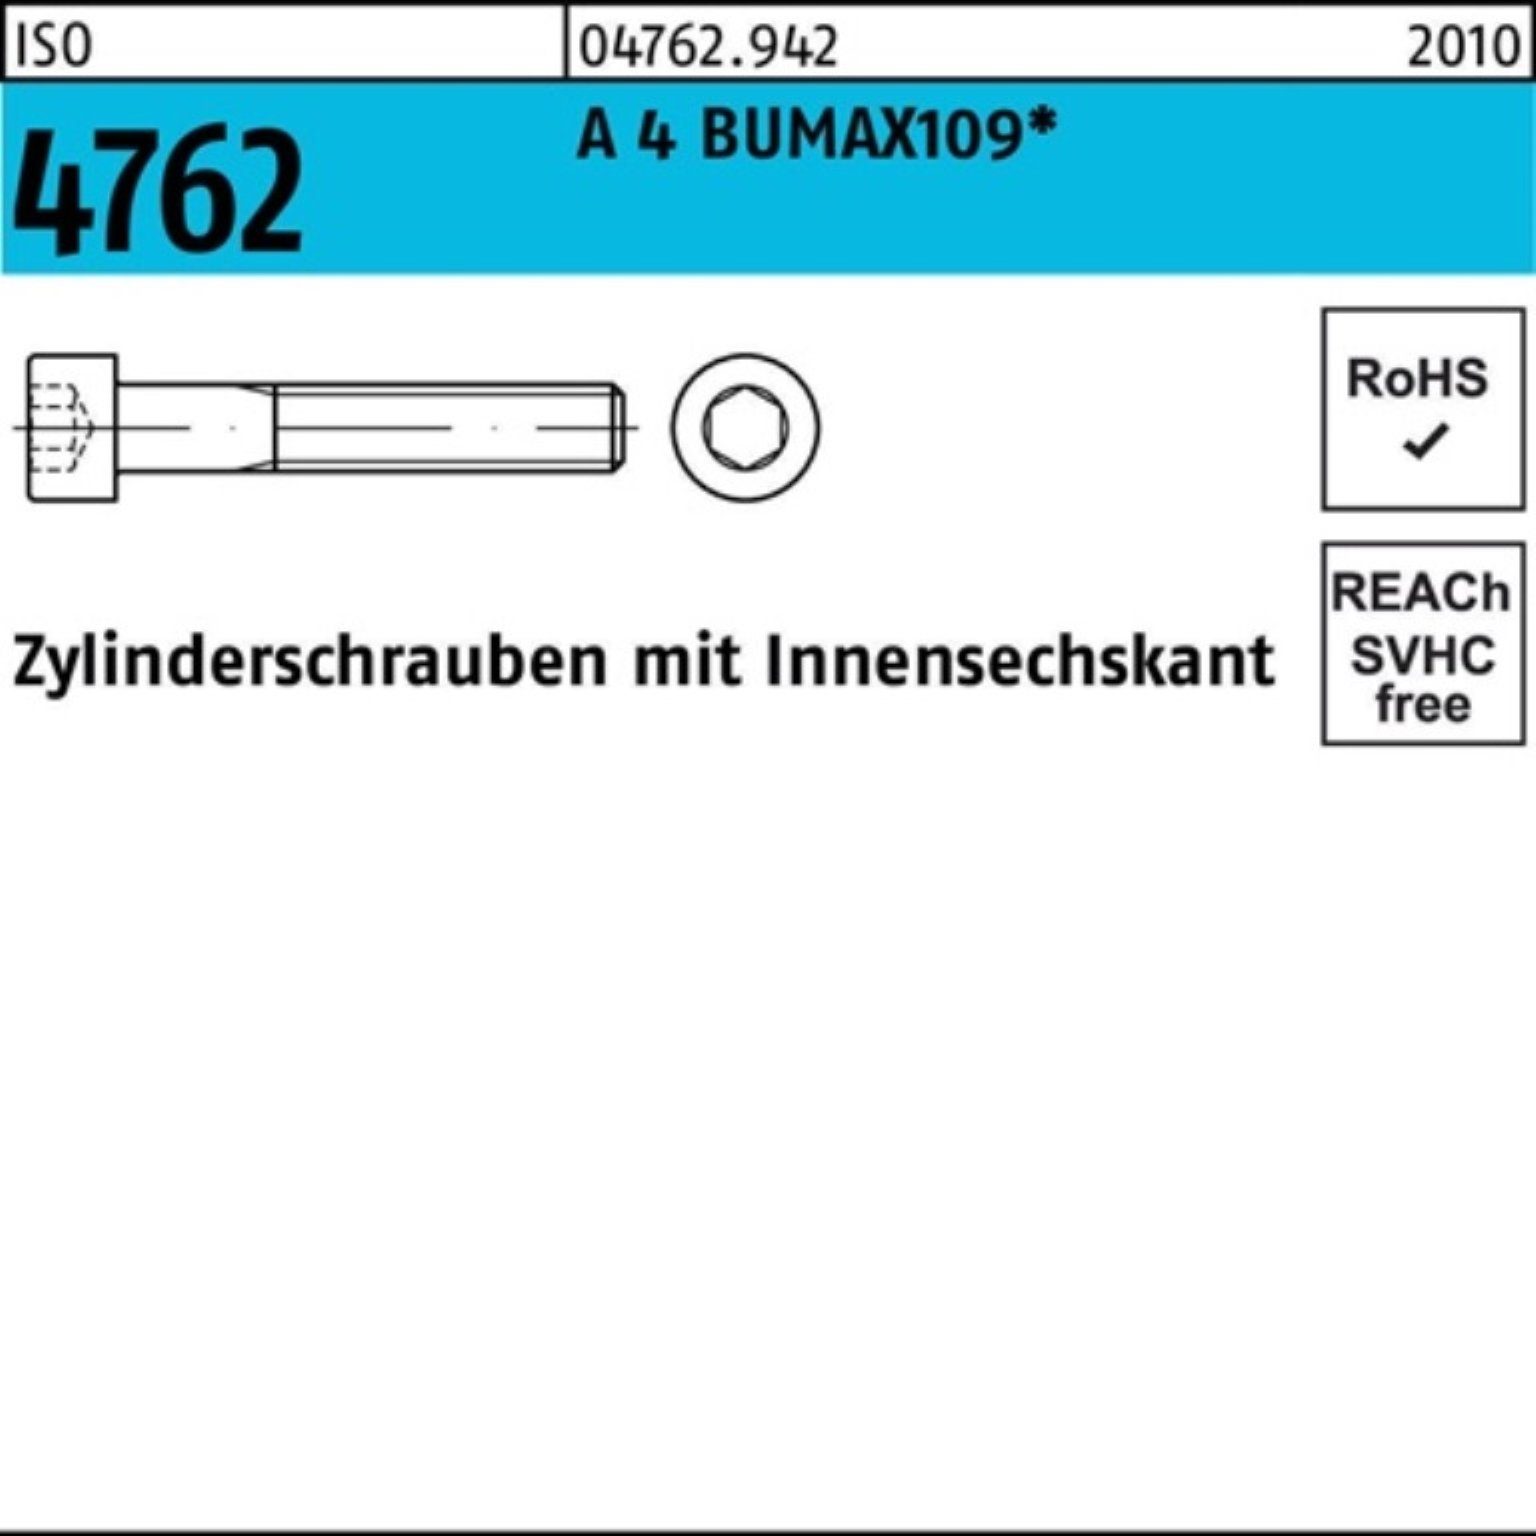 Bufab Zylinderschraube 100er Pack Zylinderschraube ISO 4762 Innen-6kt M8x 40 A 4 BUMAX109 50